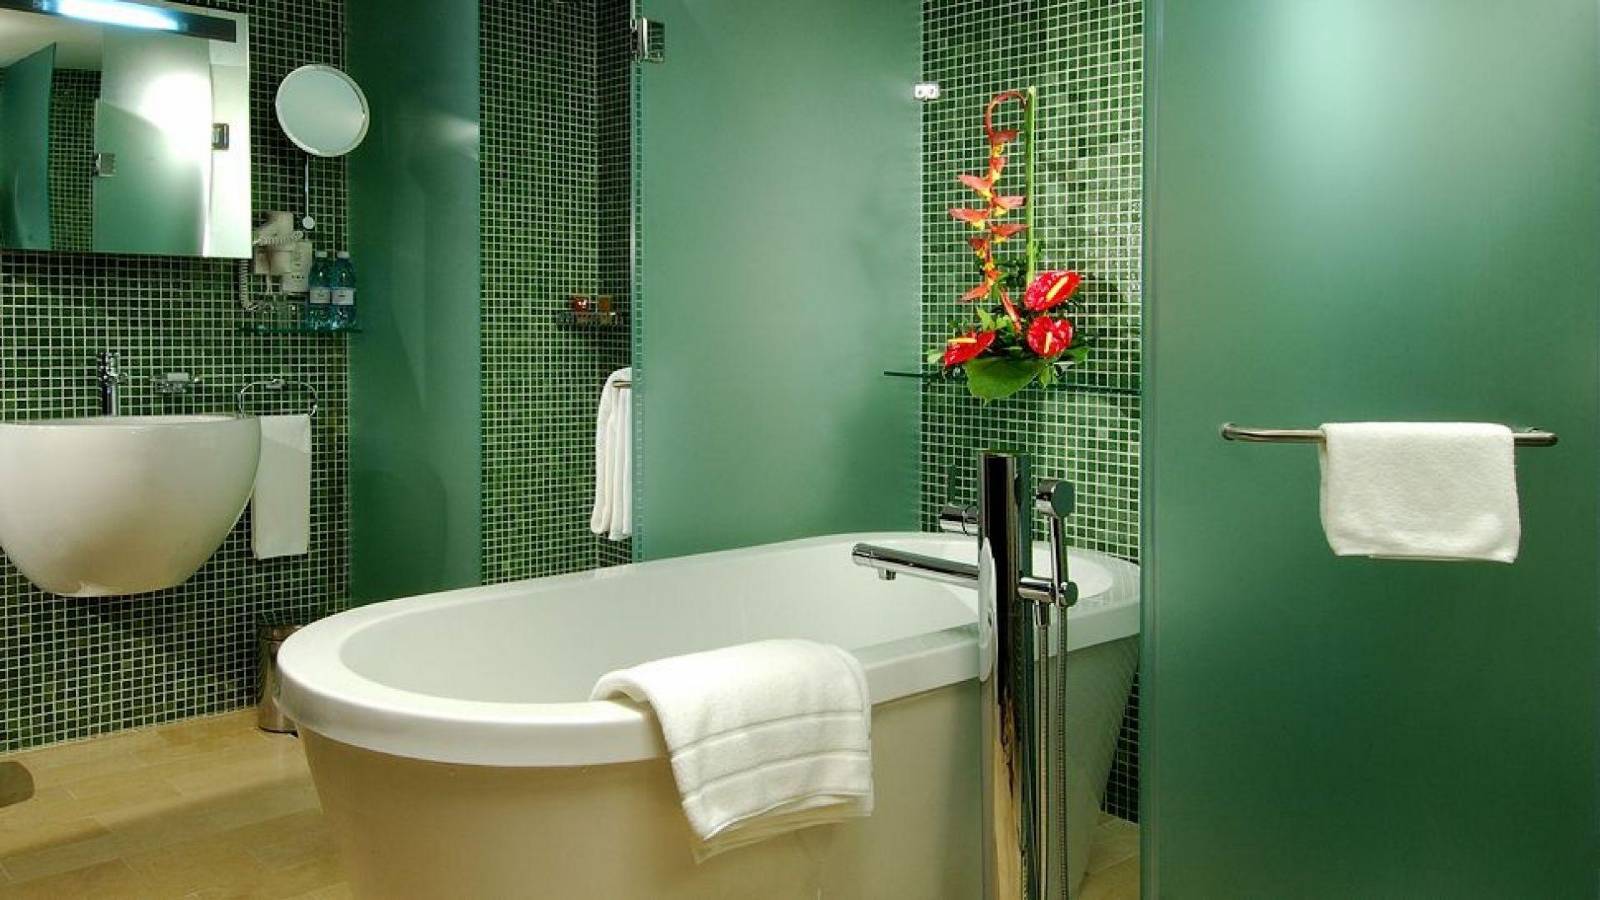 Зеленая Плитка В Ванную Комнату Фото